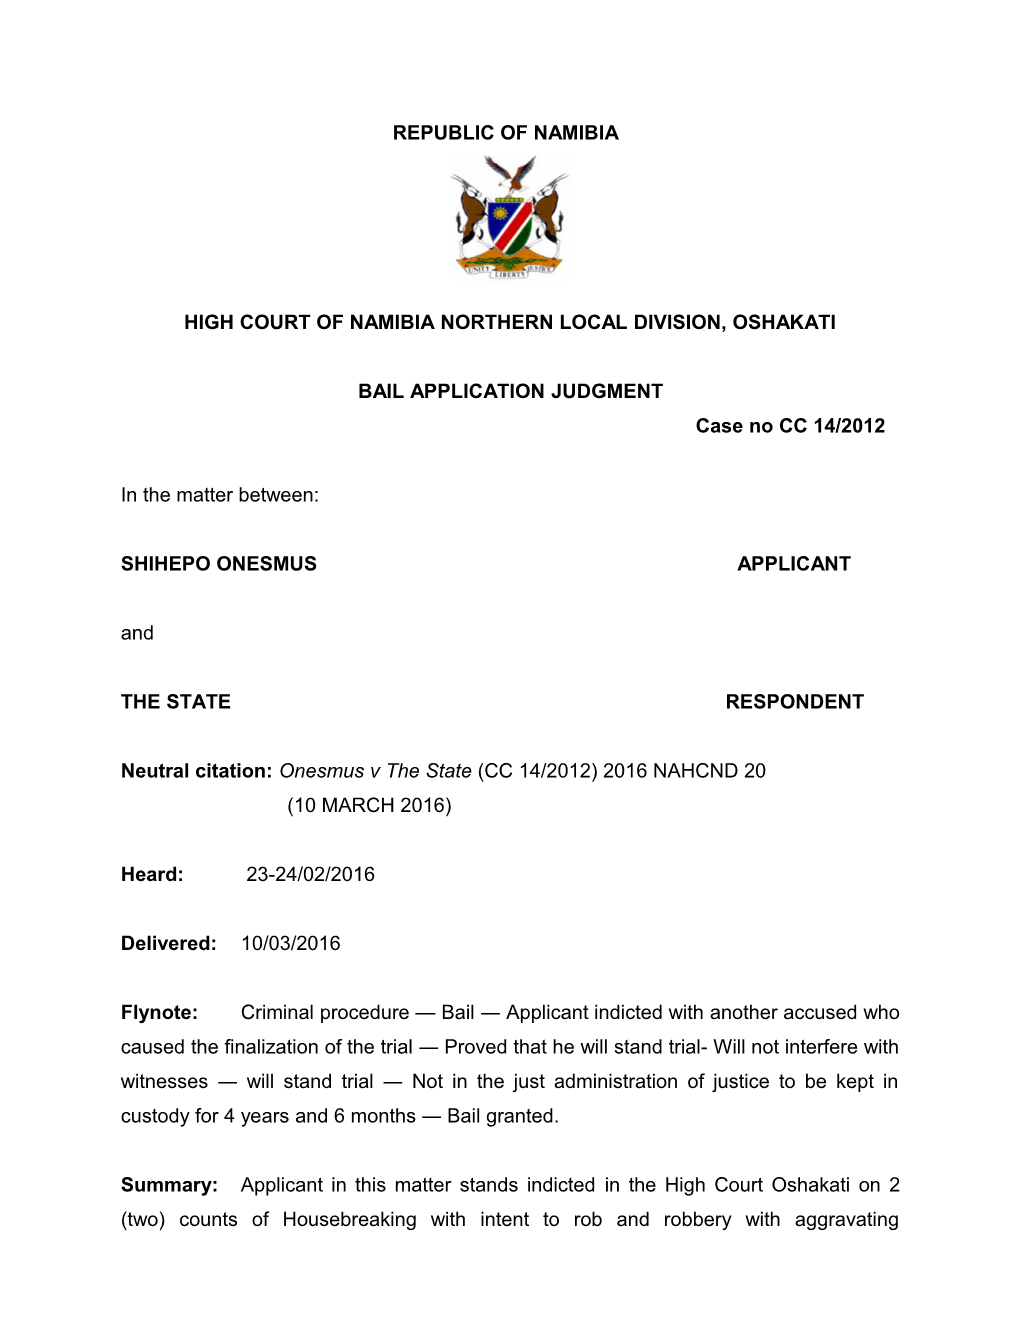 High Court of Namibia Northern Local Division, Oshakati